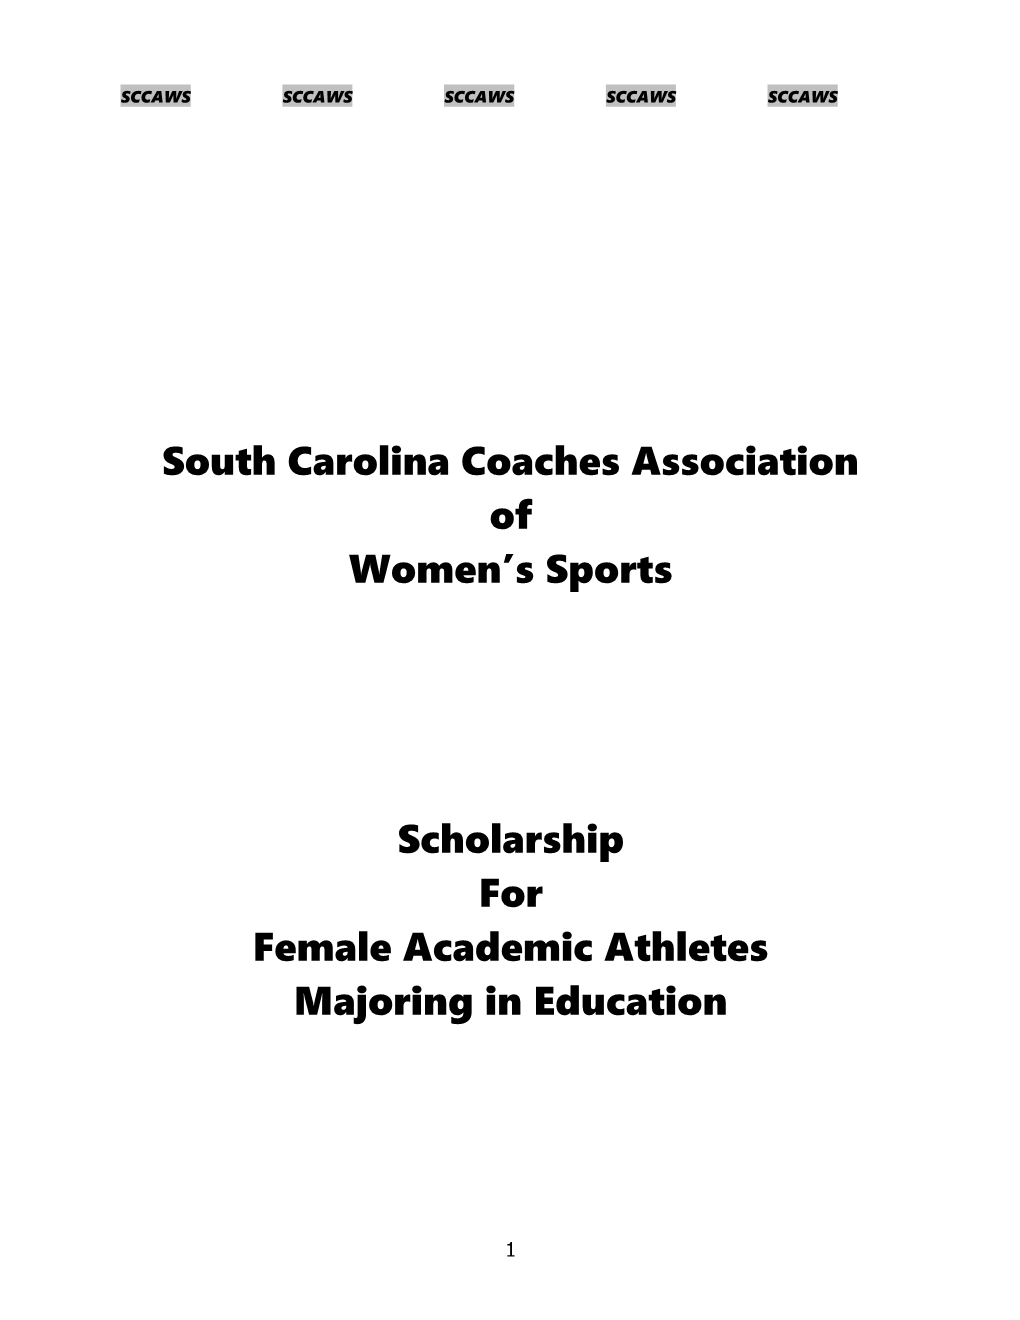 South Carolina Coaches Association of Women S Sports Scholarship